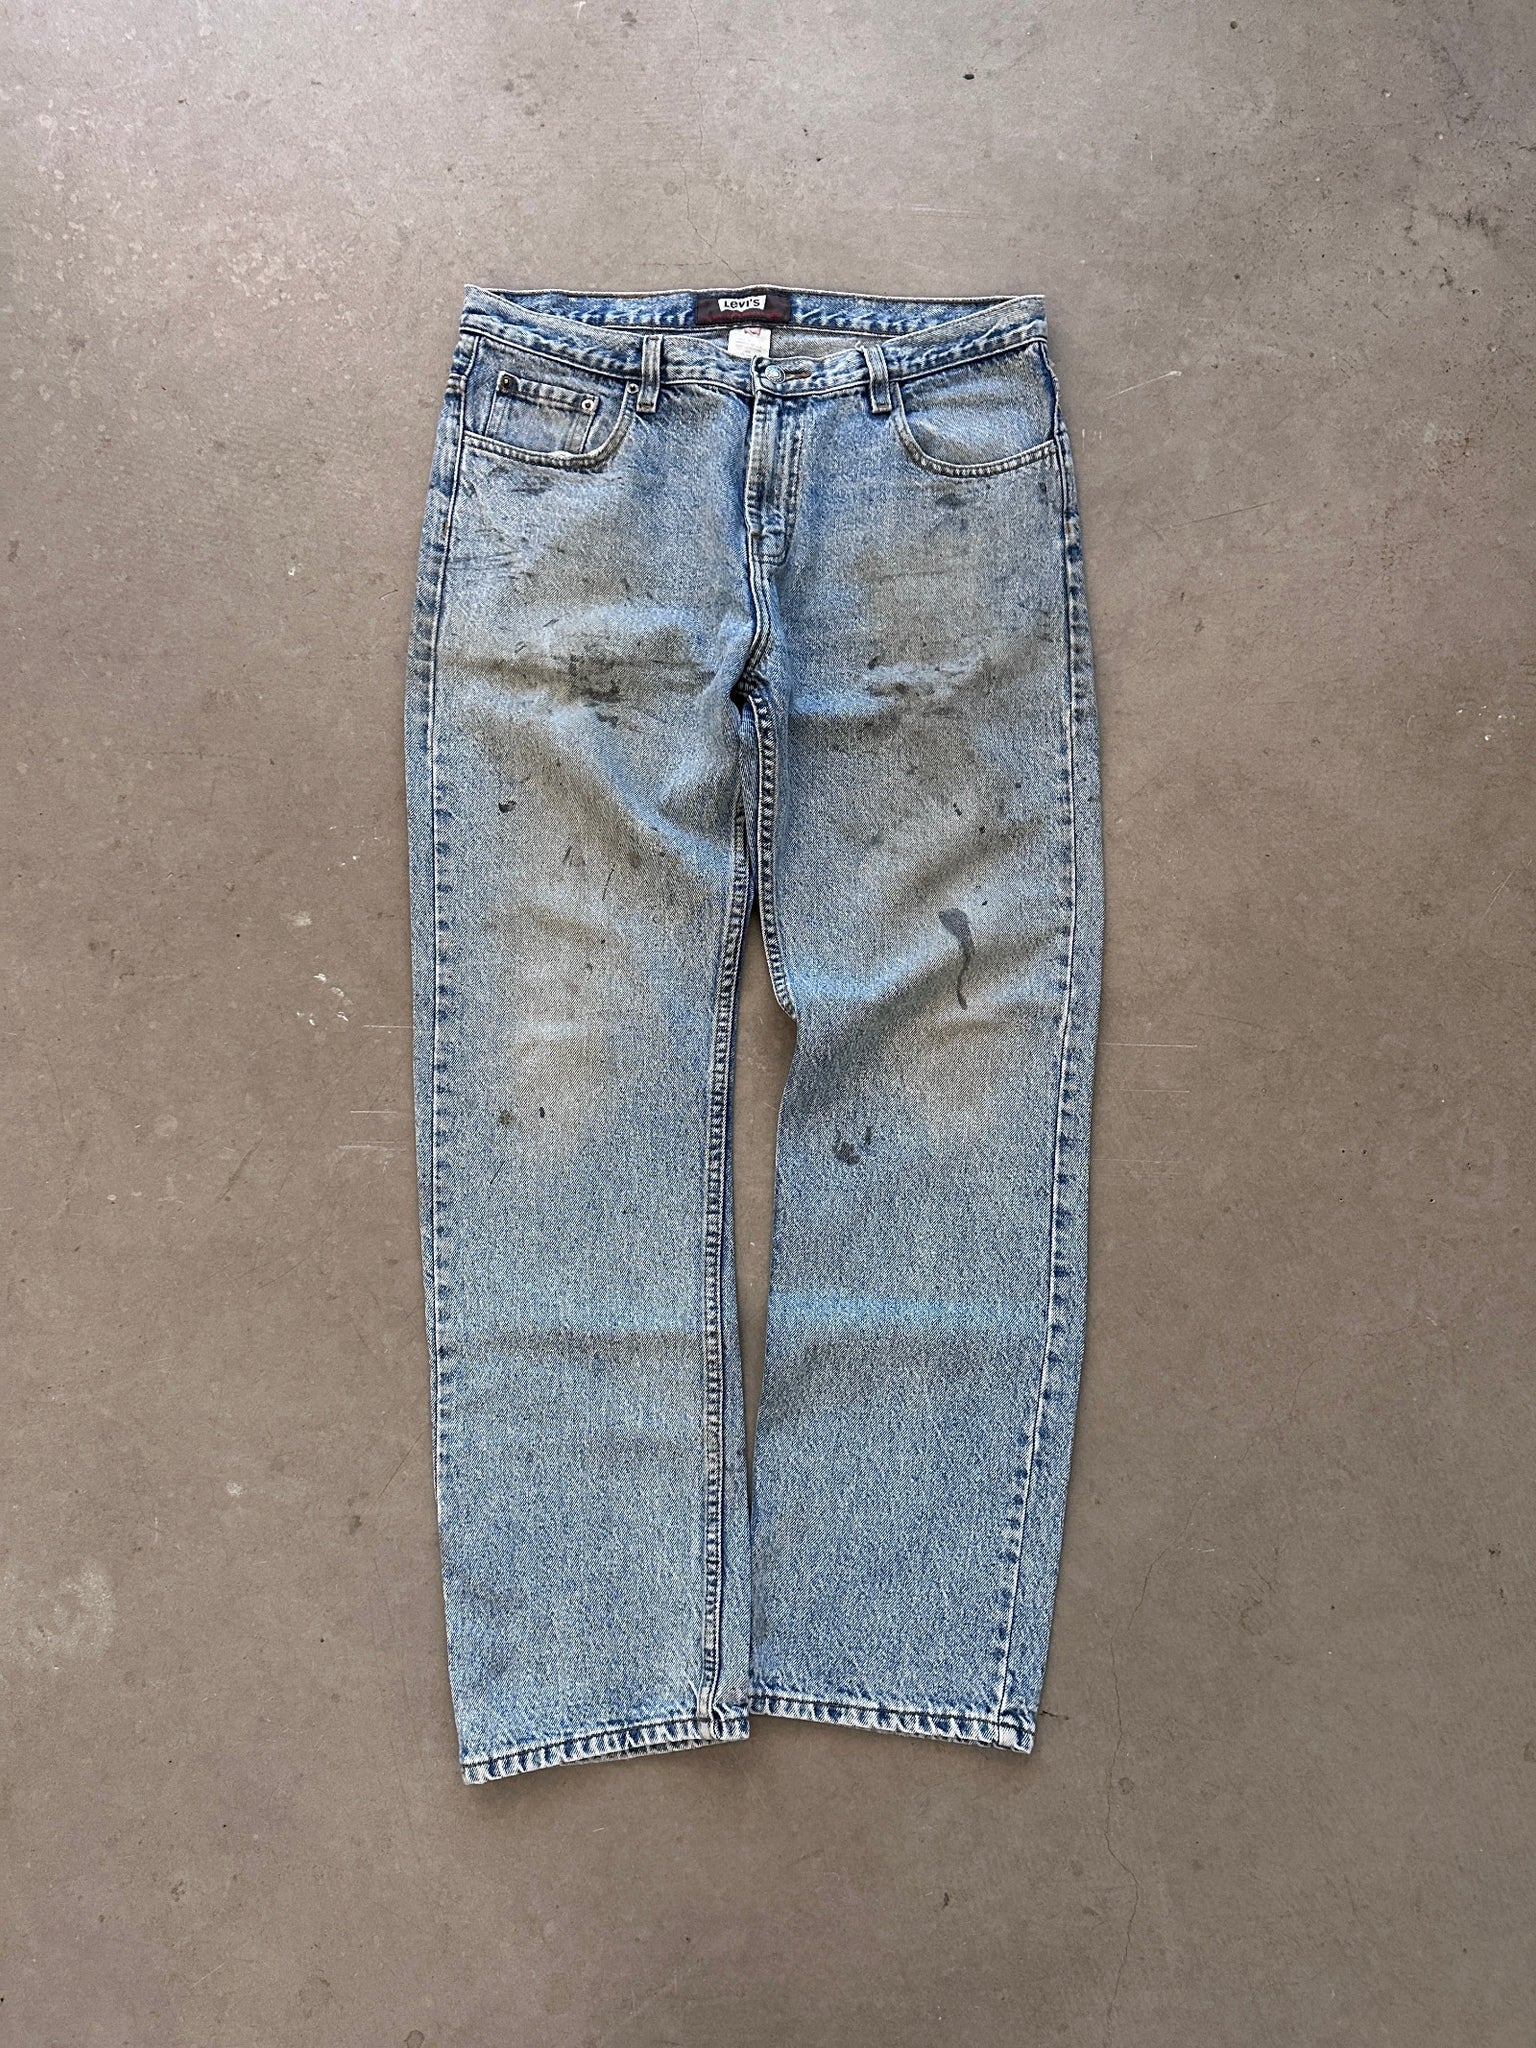 1990's Levi's 501 Painted Jeans - 36 x 32